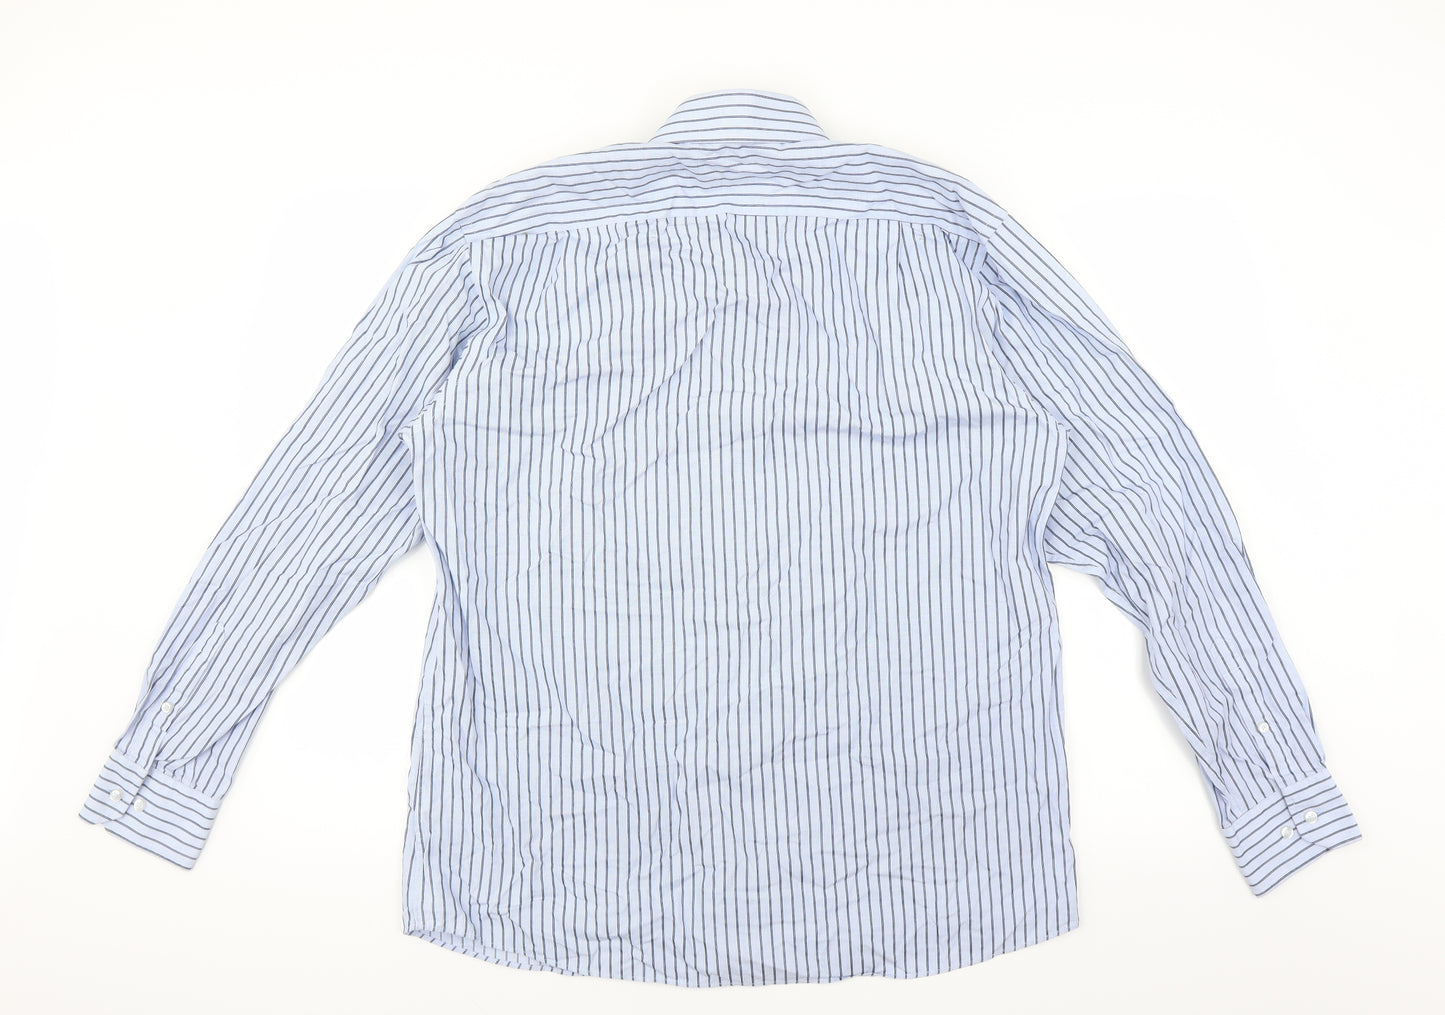 George Mens Blue Striped   Dress Shirt Size 16